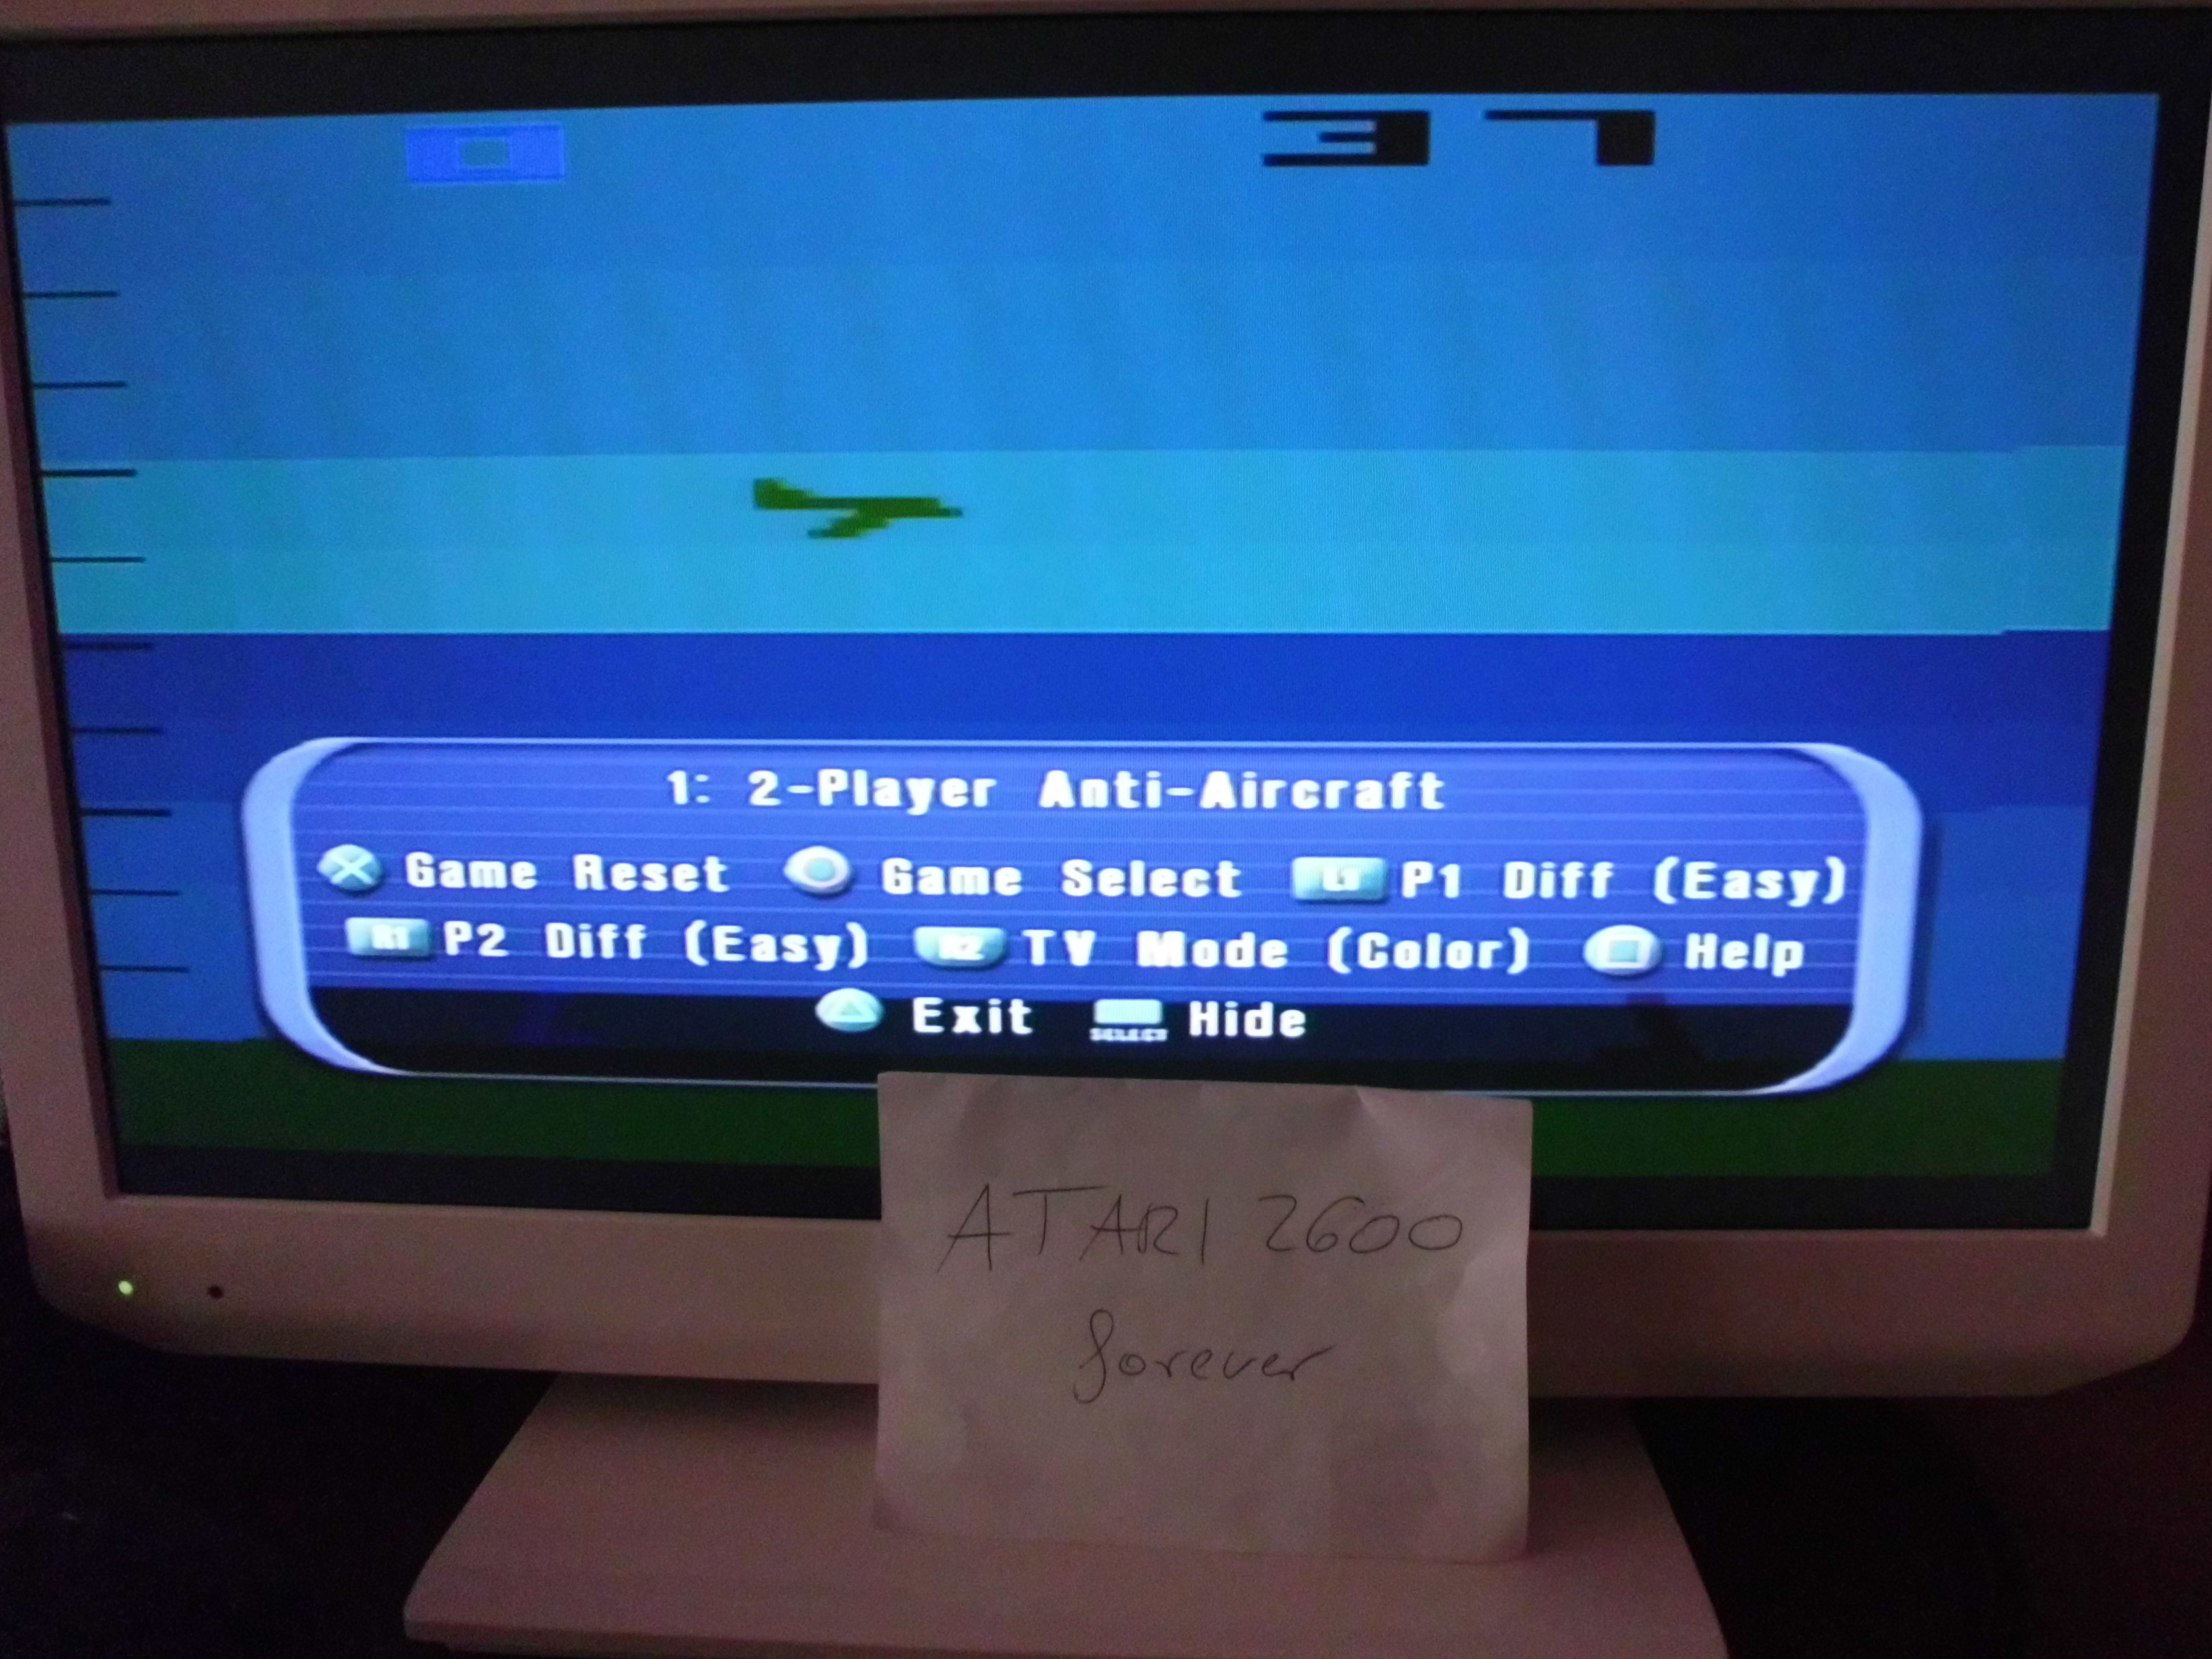 atari2600forever: Atari Anthology: Air-Sea Battle [Game 1B] (Playstation 2) 37 points on 2018-05-02 08:12:40